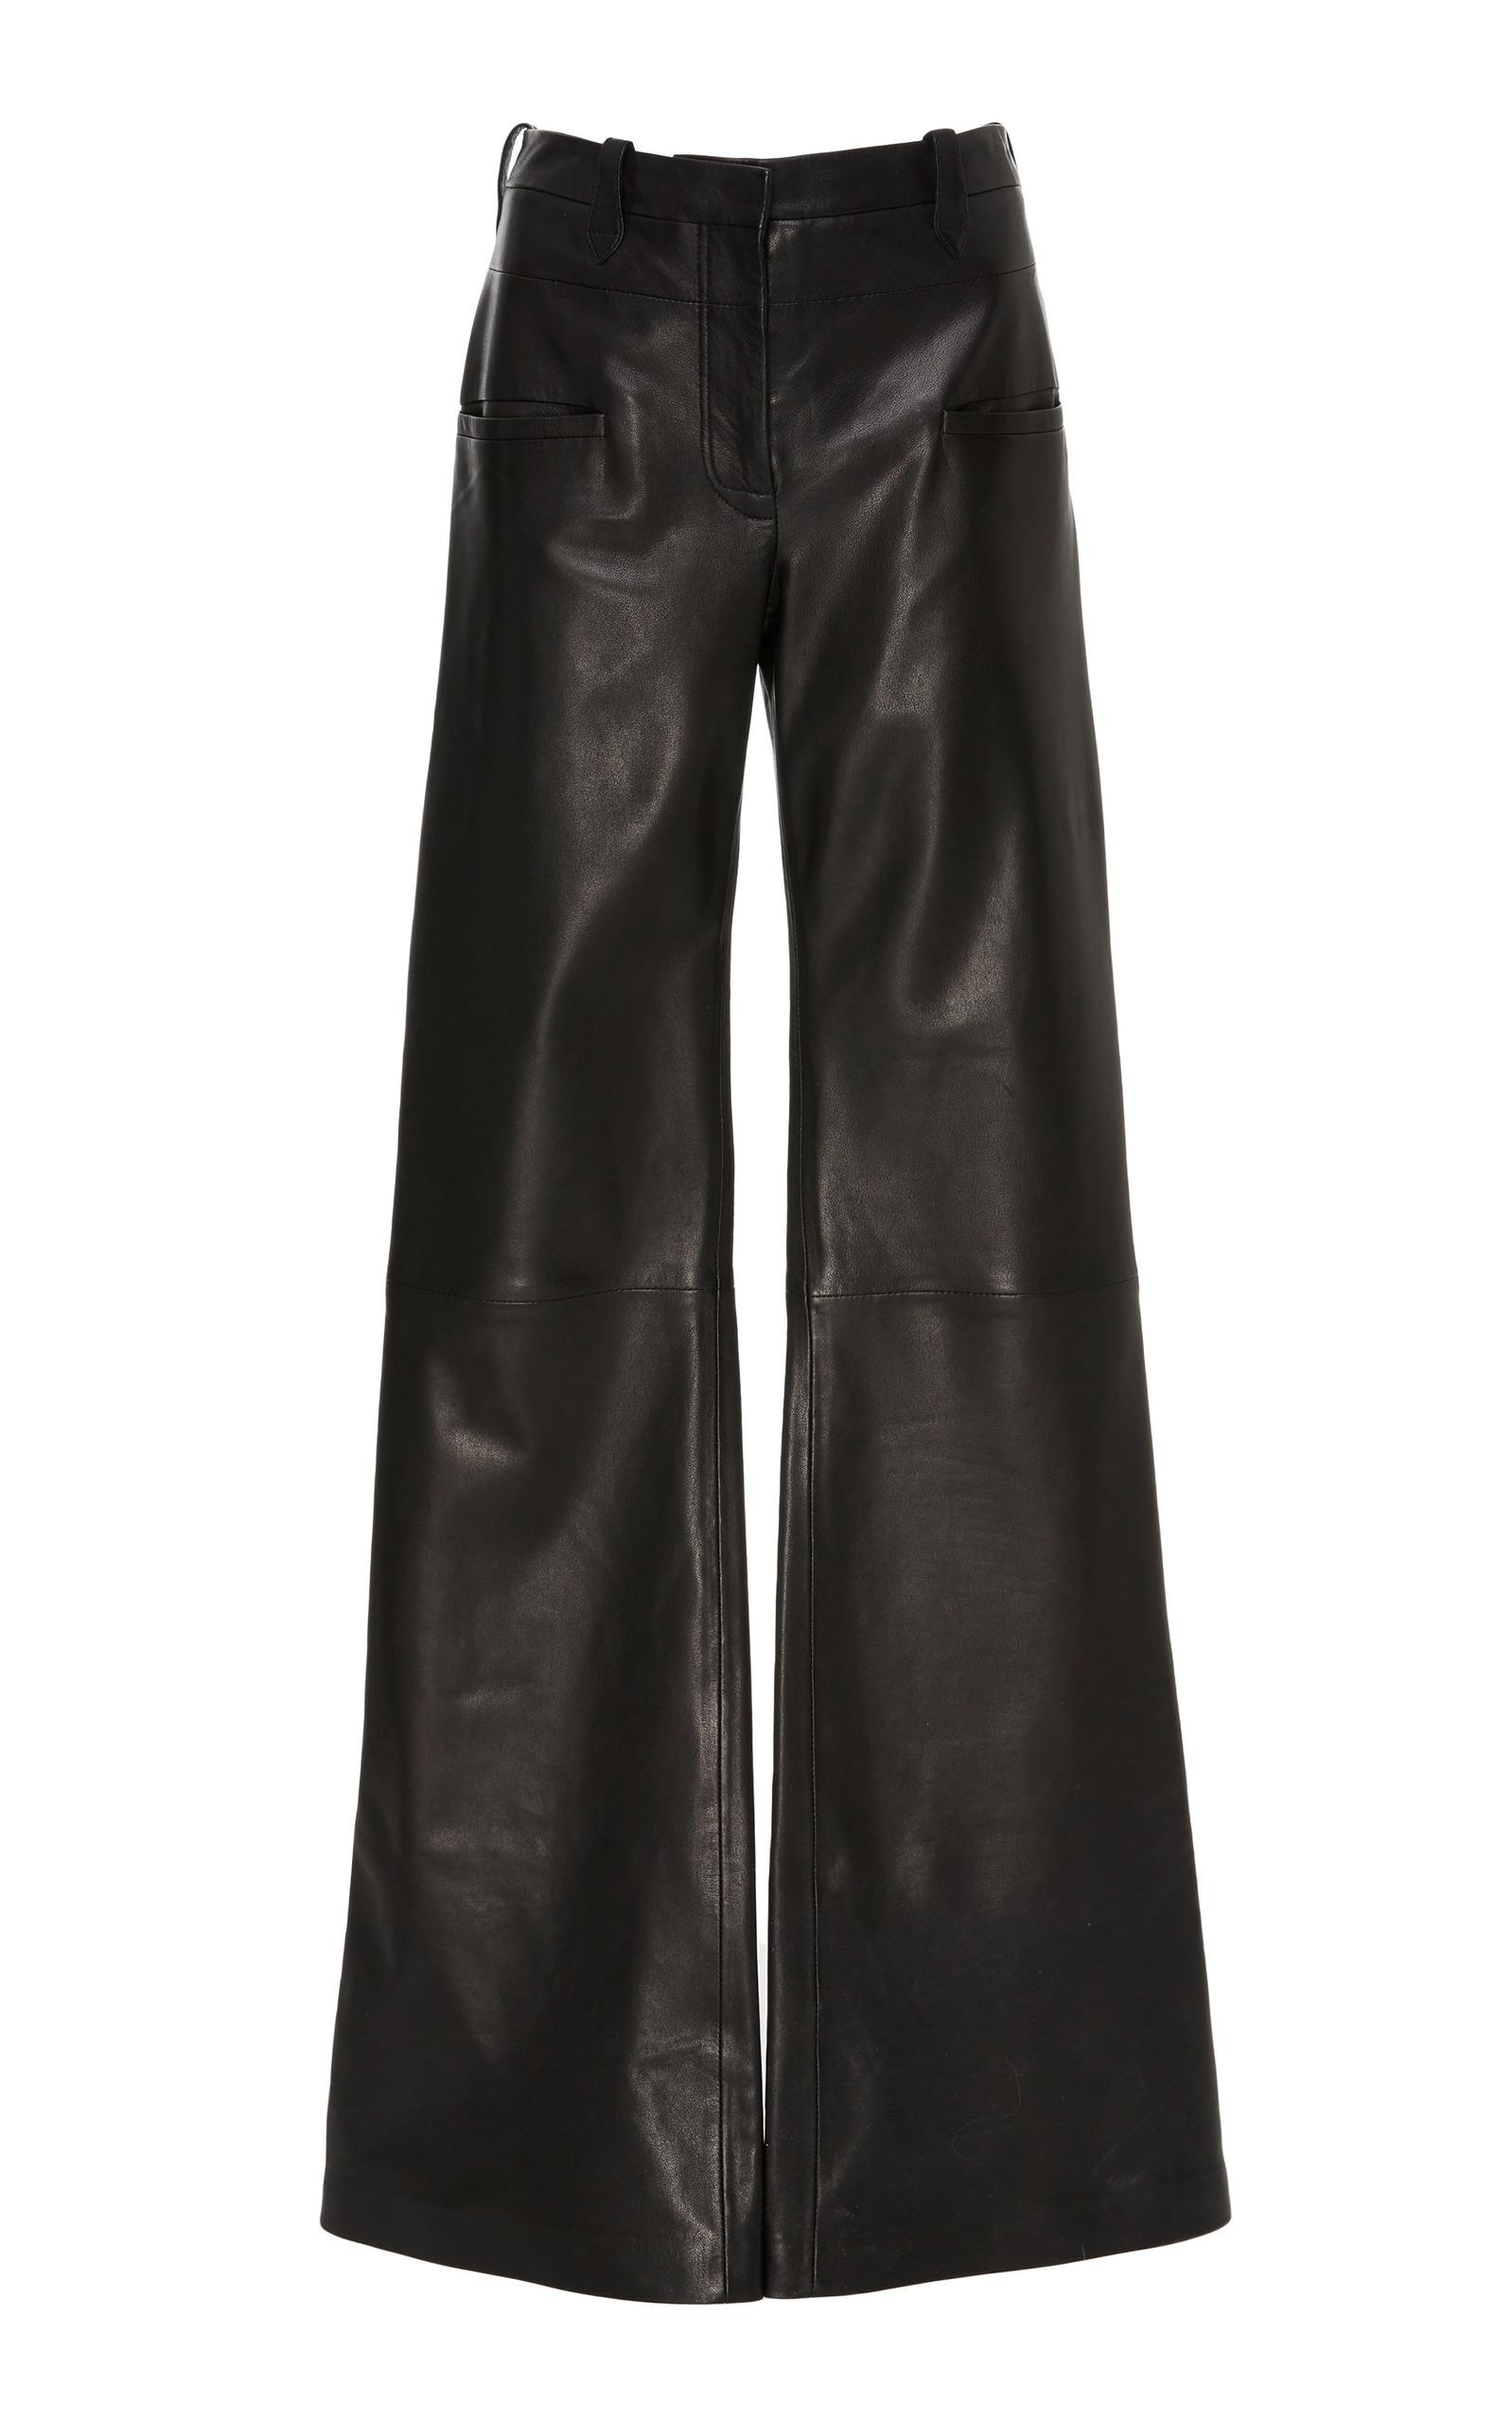 Lyst - Altuzarra Serge Leather Pant in Black